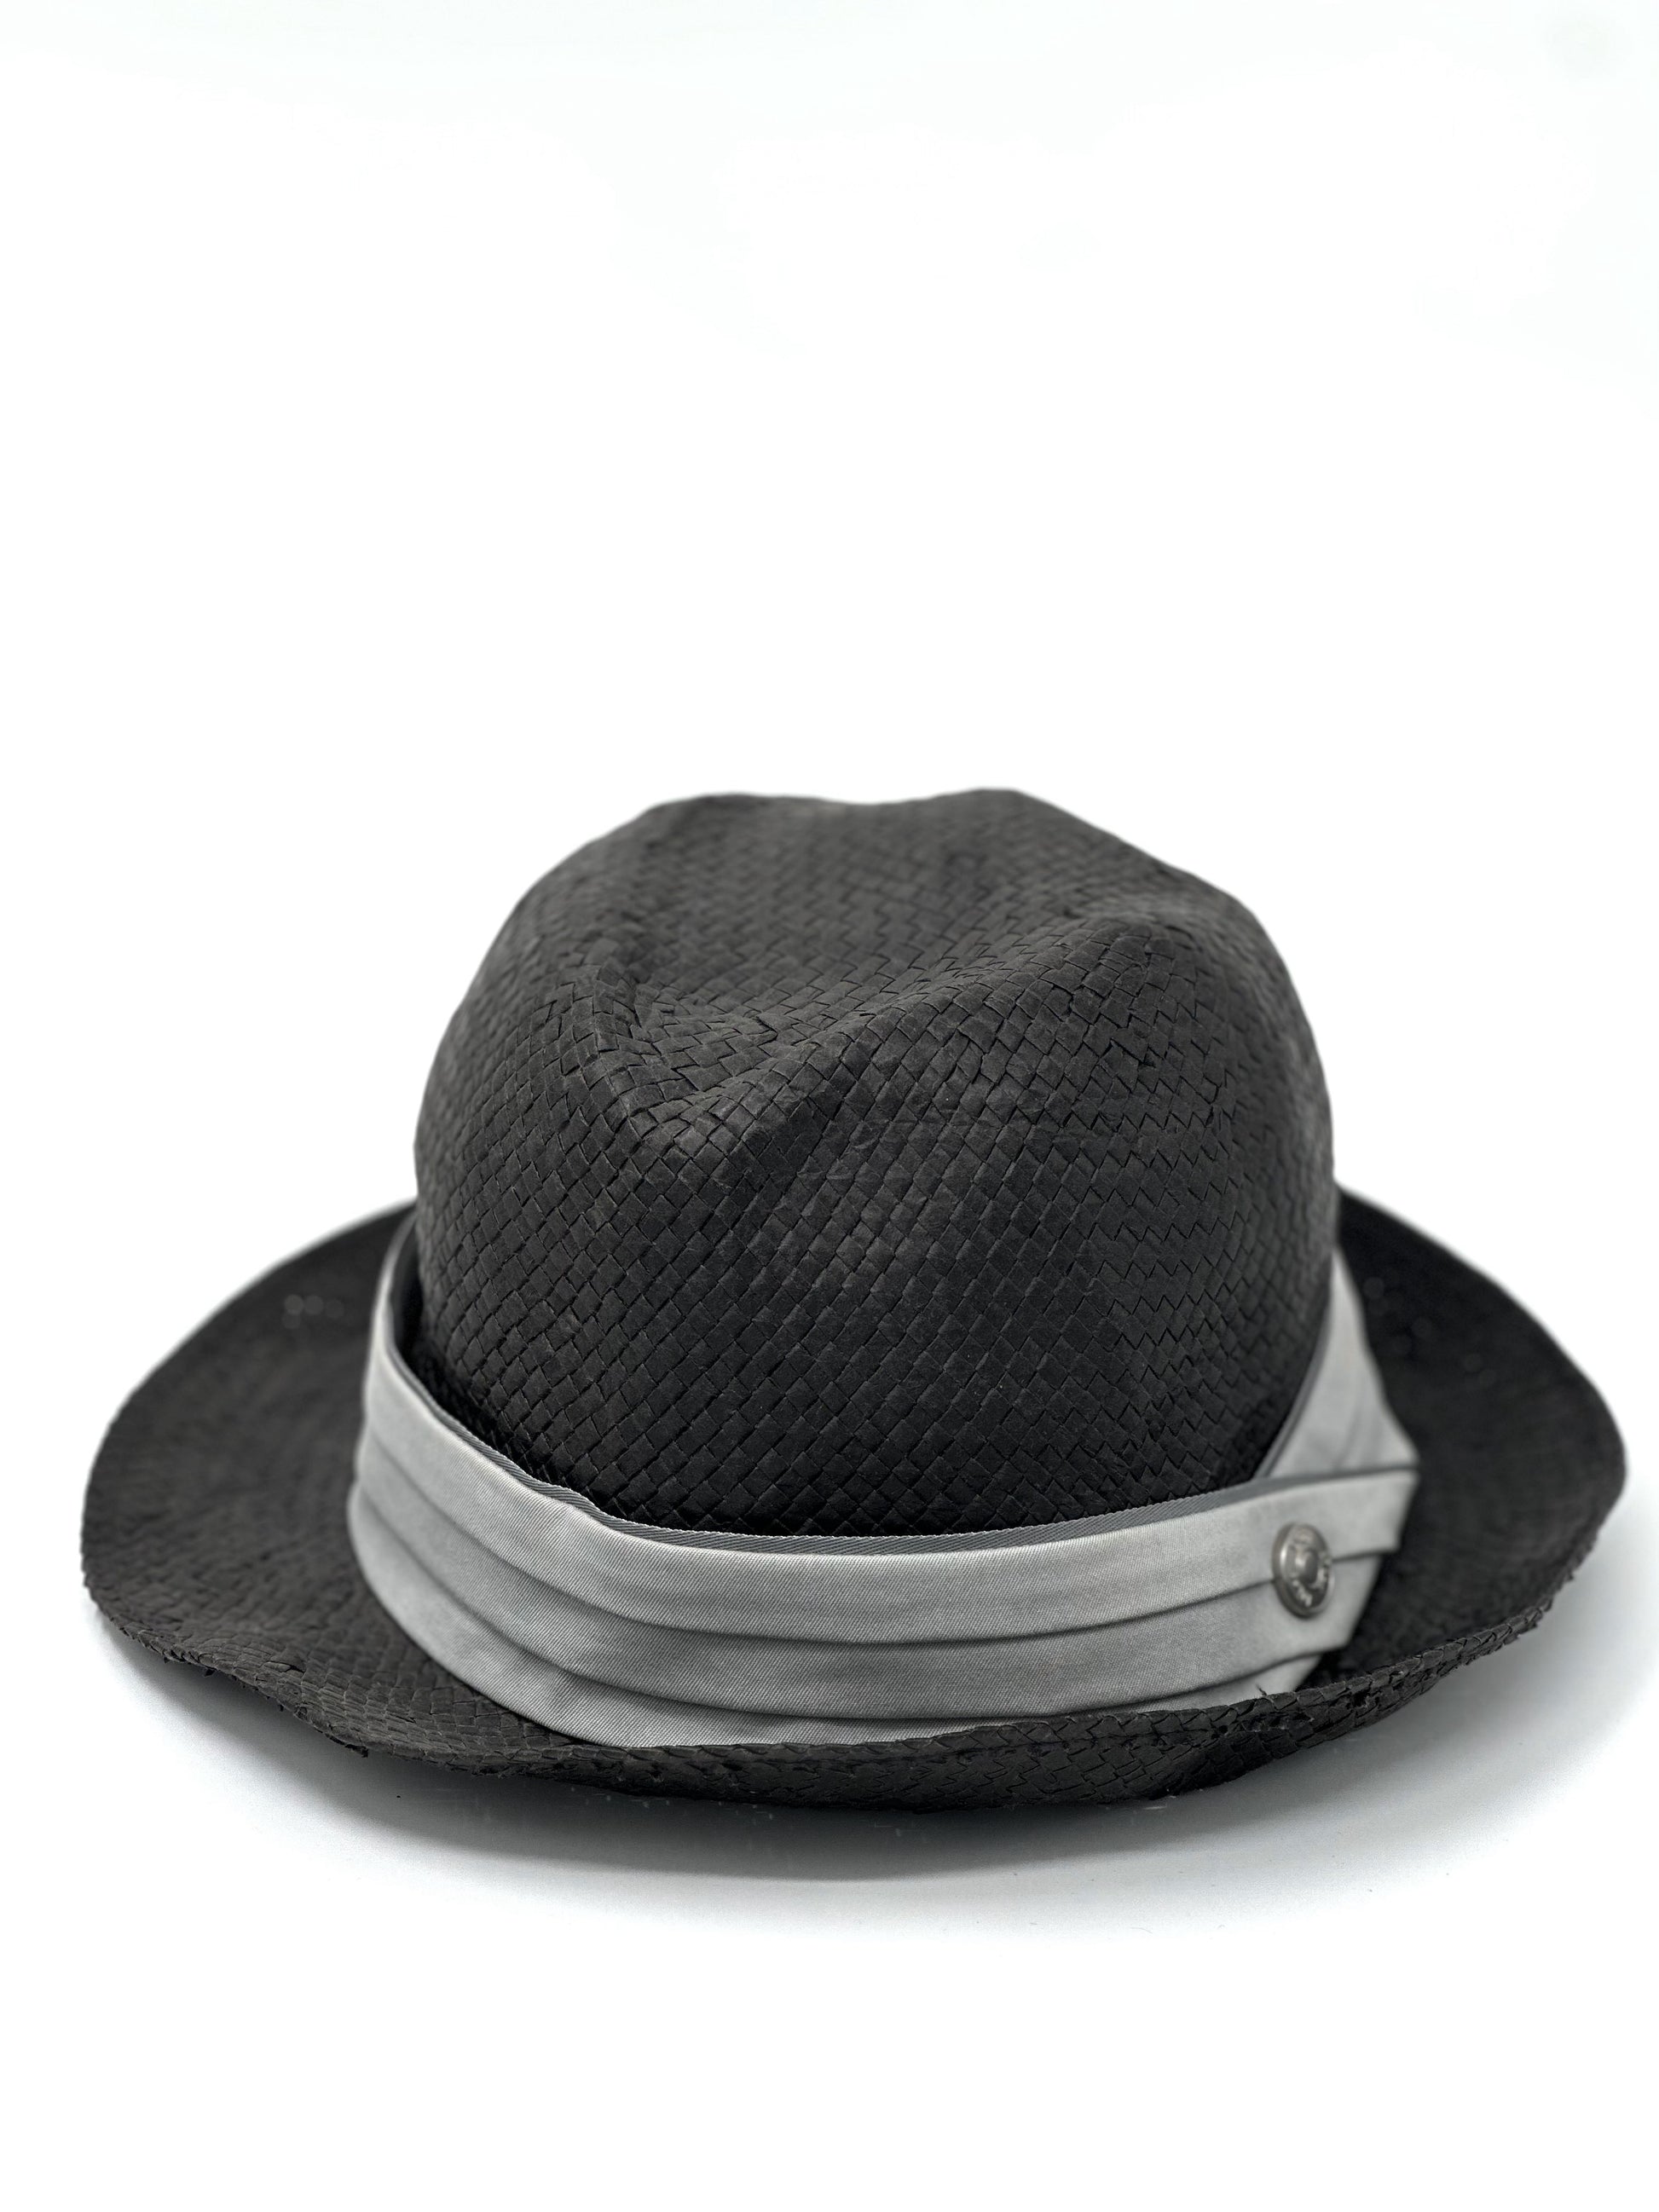 CHRISTIAN DIOR Black Straw Hat | Size T4 (Children) | Good Condition